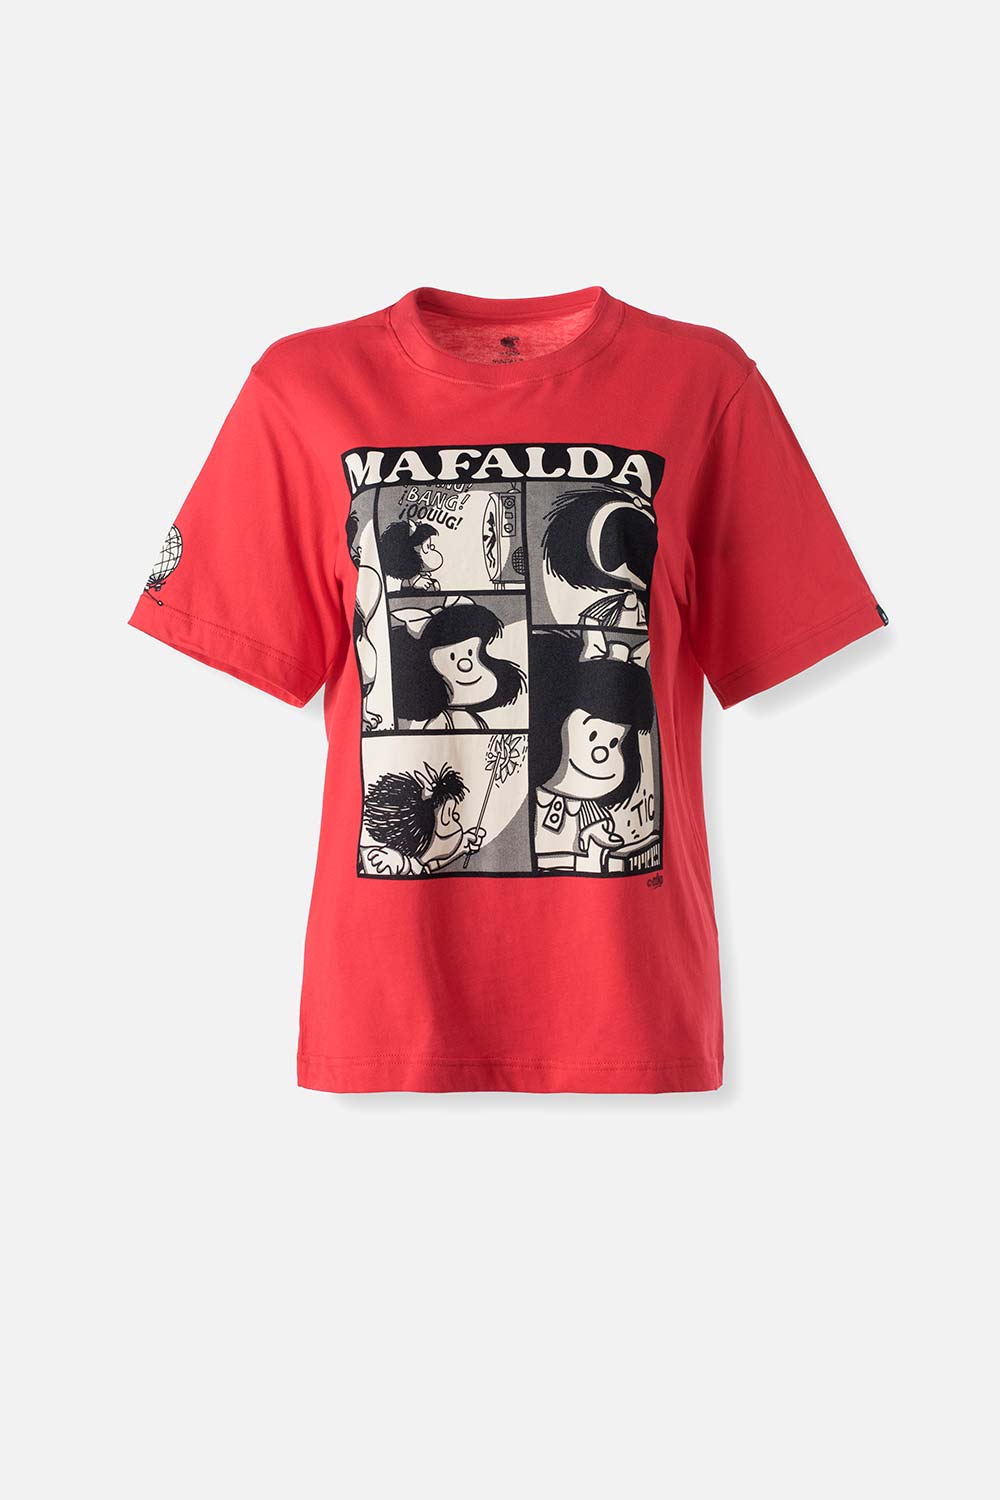 Camiseta de Mafalda manga corta roja para mujer XS-0